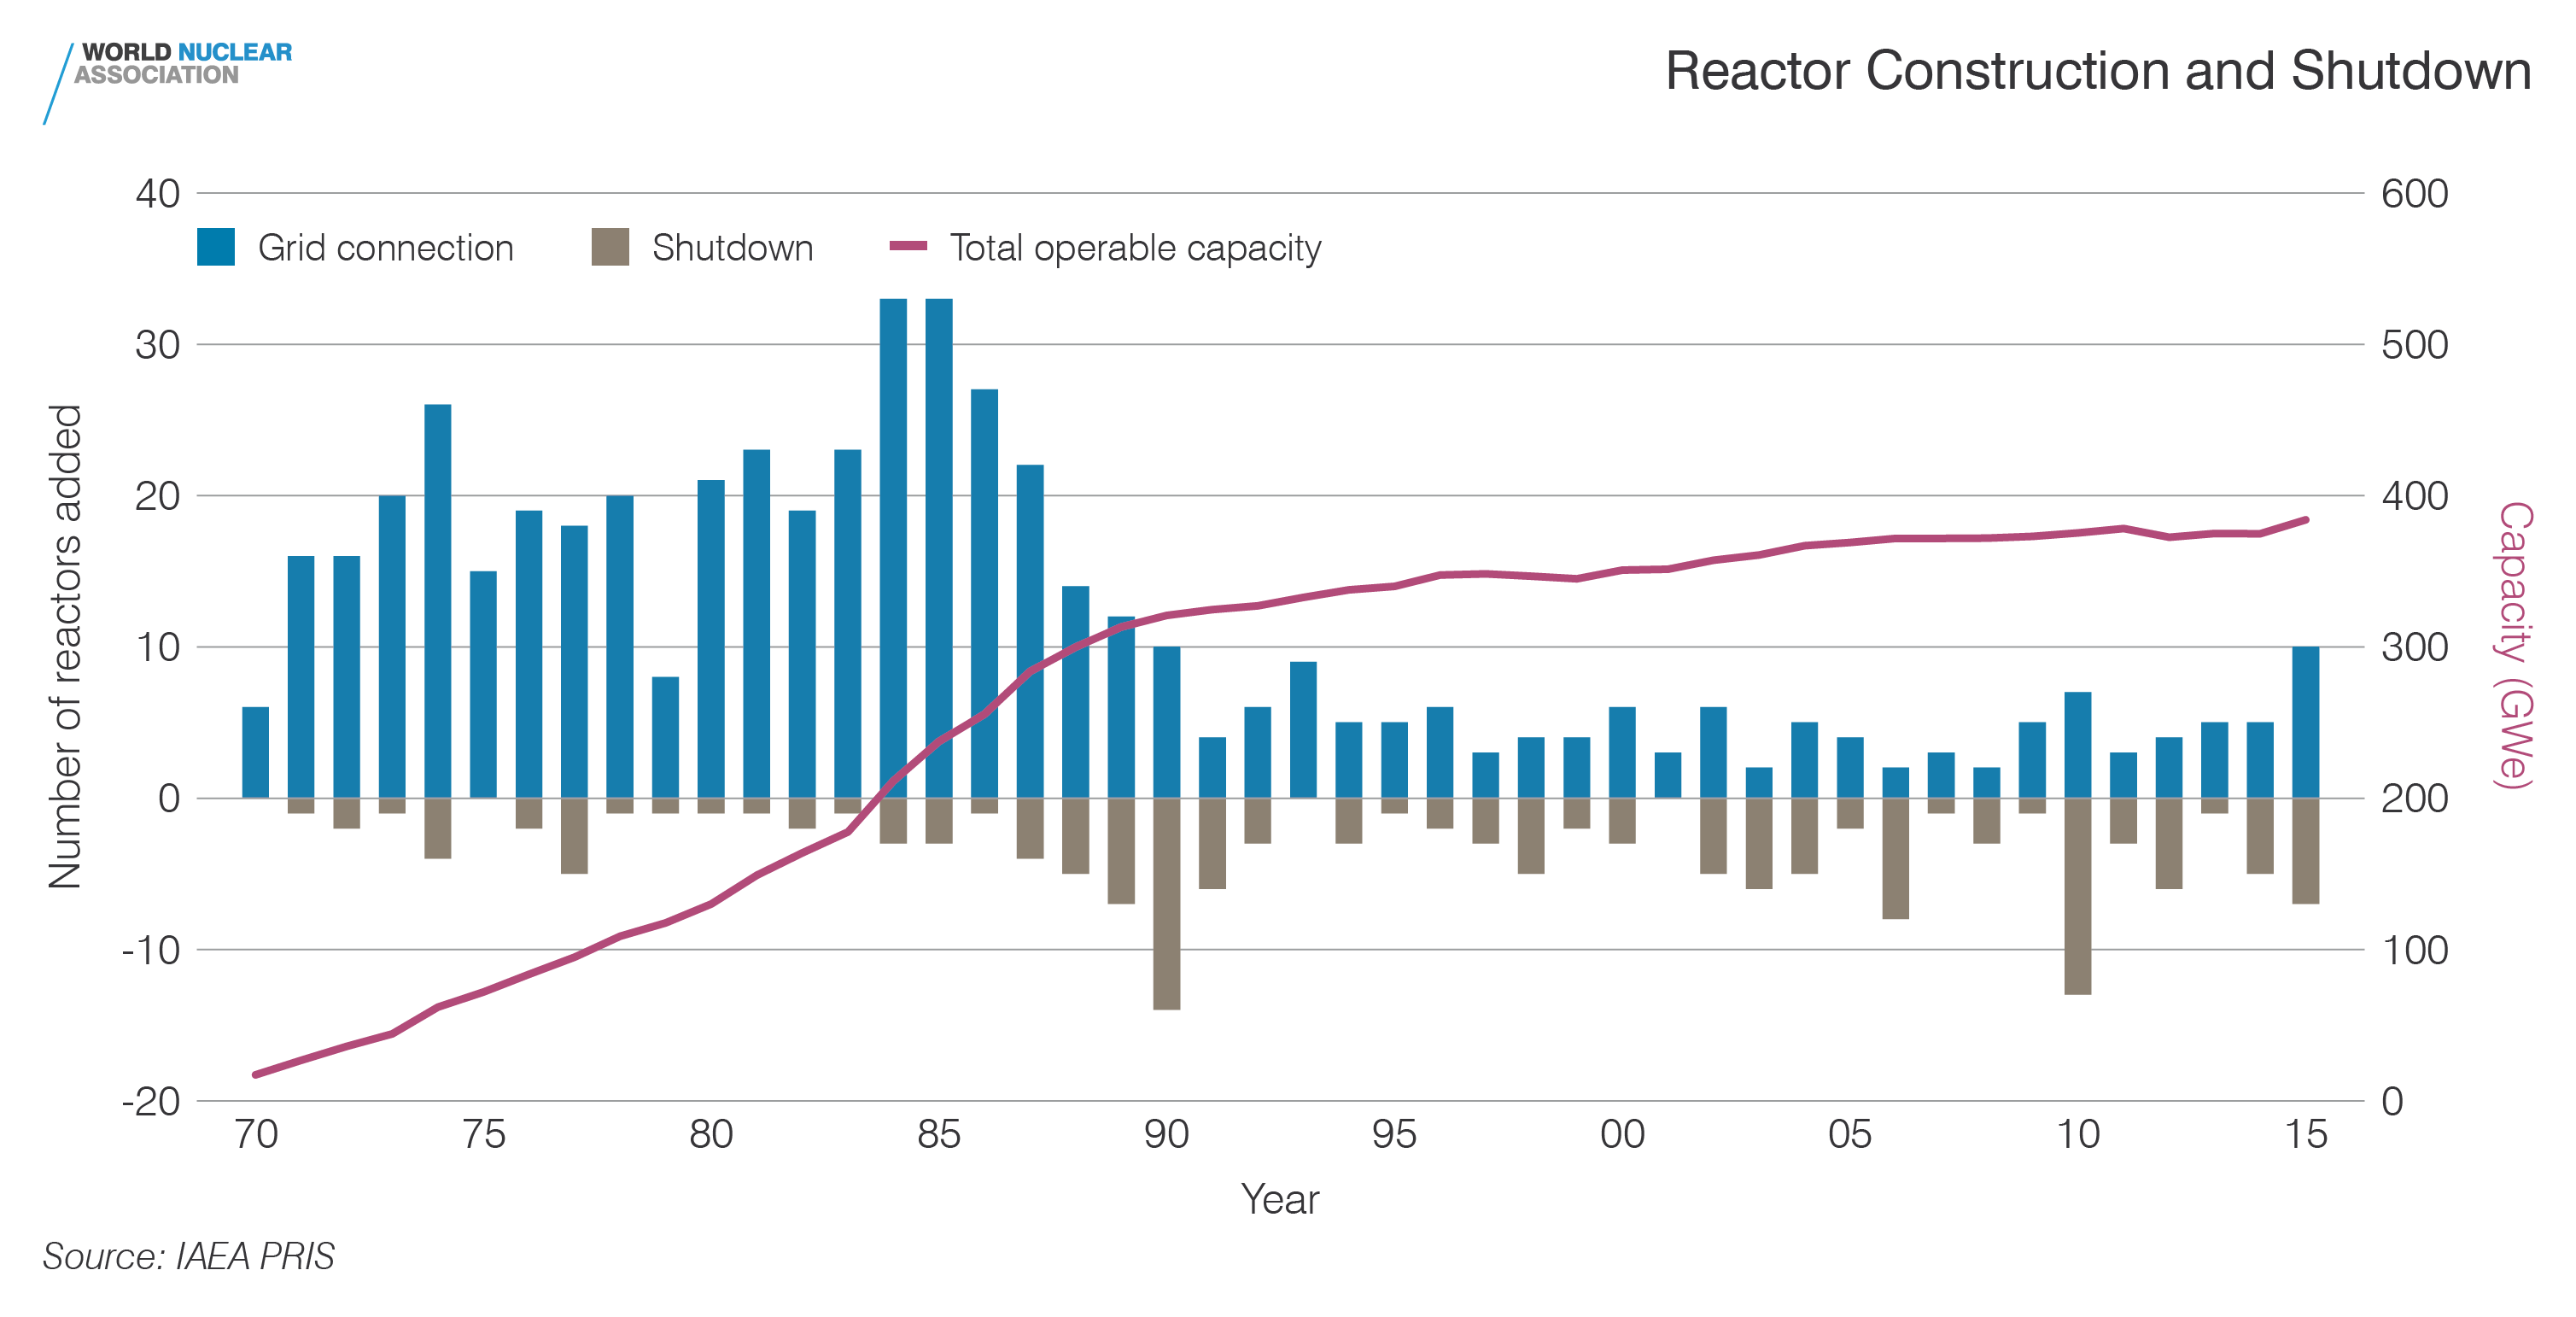 Reactor construction and shutdown